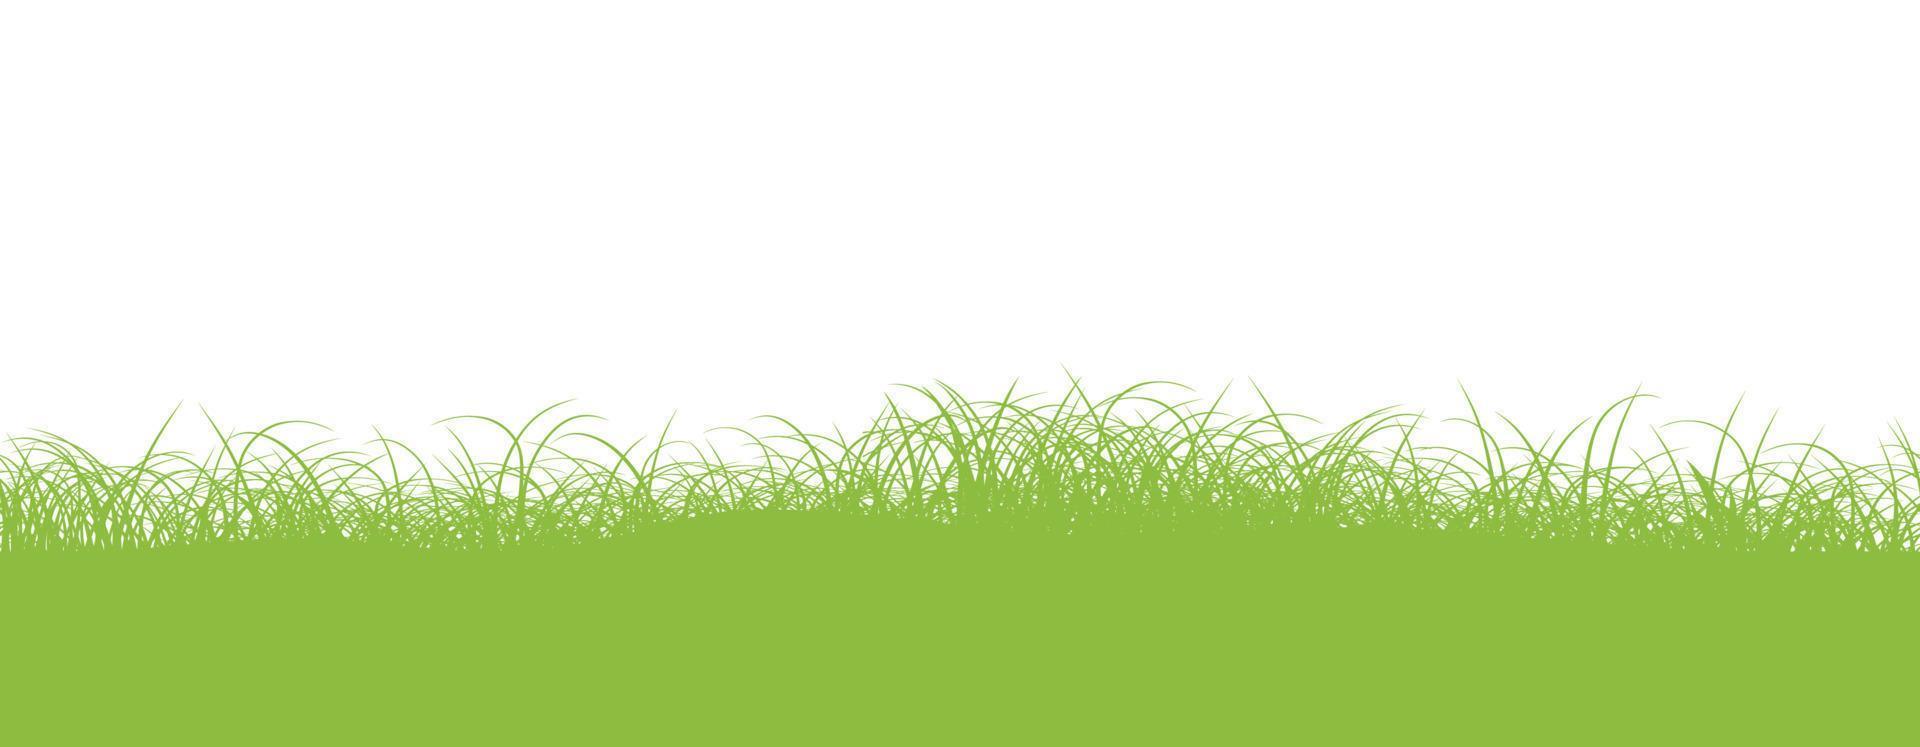 Ilustración de fondo de vector de campo de hierba verde transparente con espacio de texto. horizontalmente repetible.